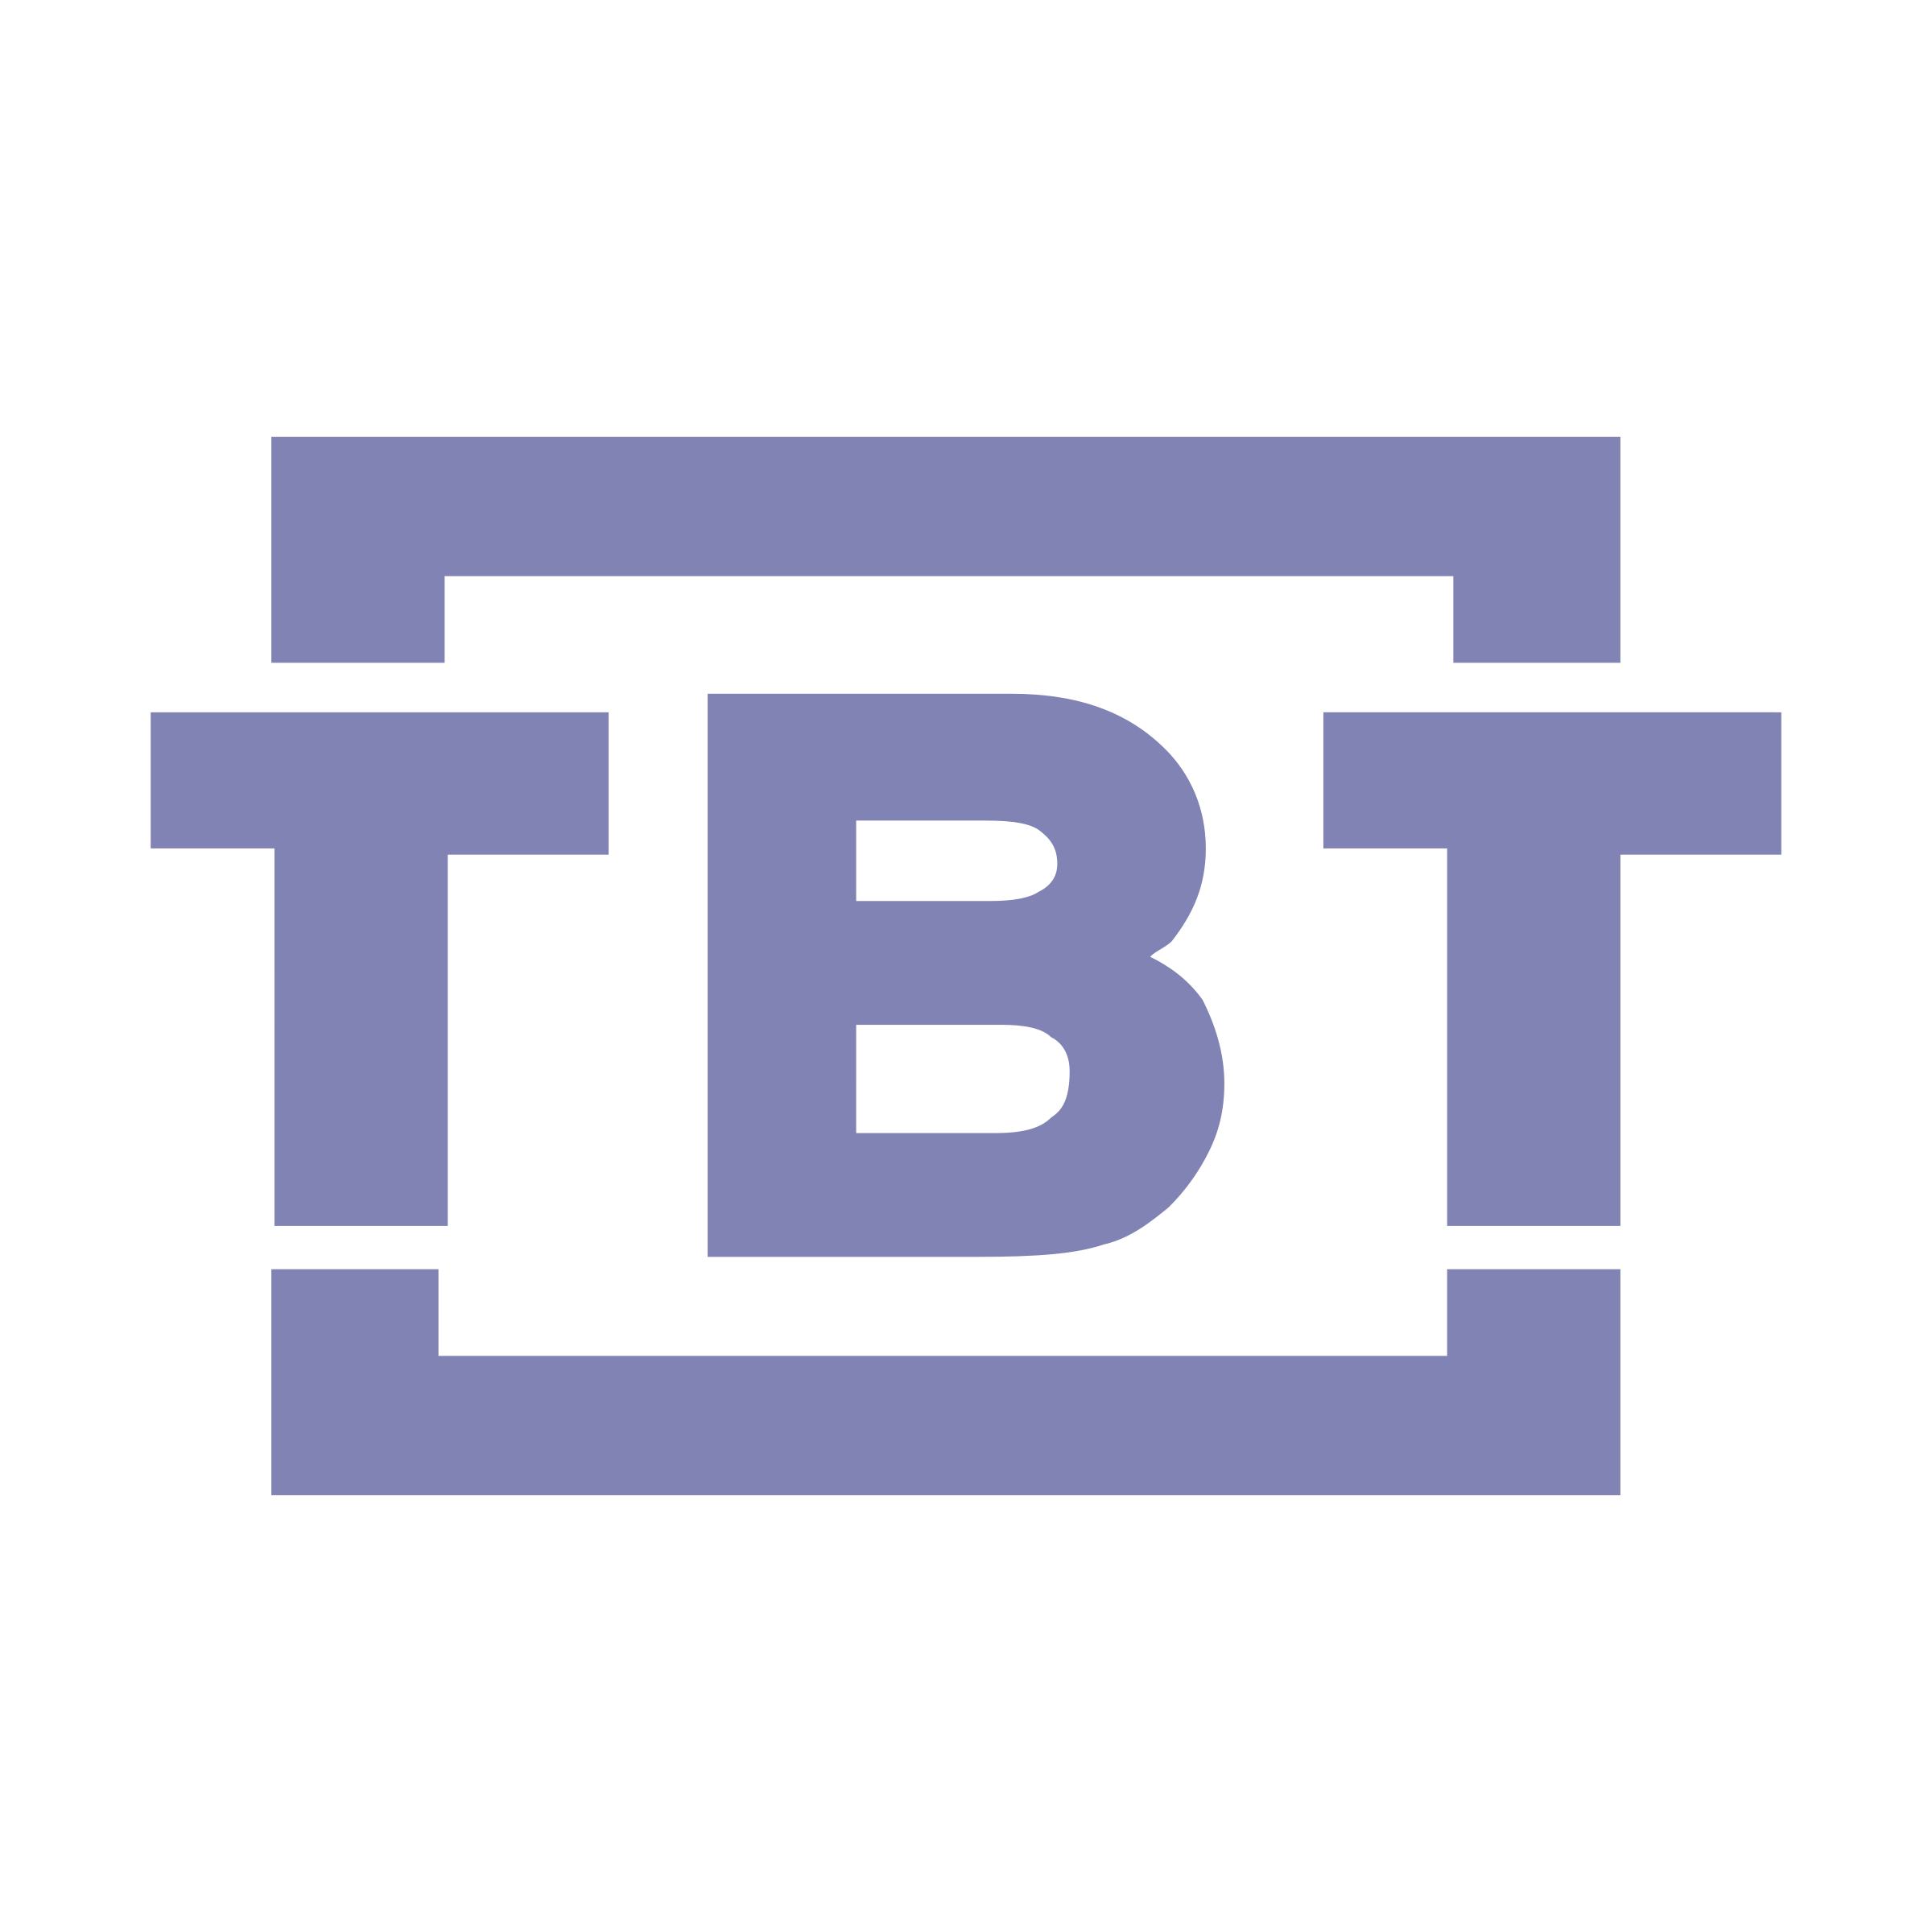 TBT Logo - TBT Logo PNG Transparent & SVG Vector - Freebie Supply